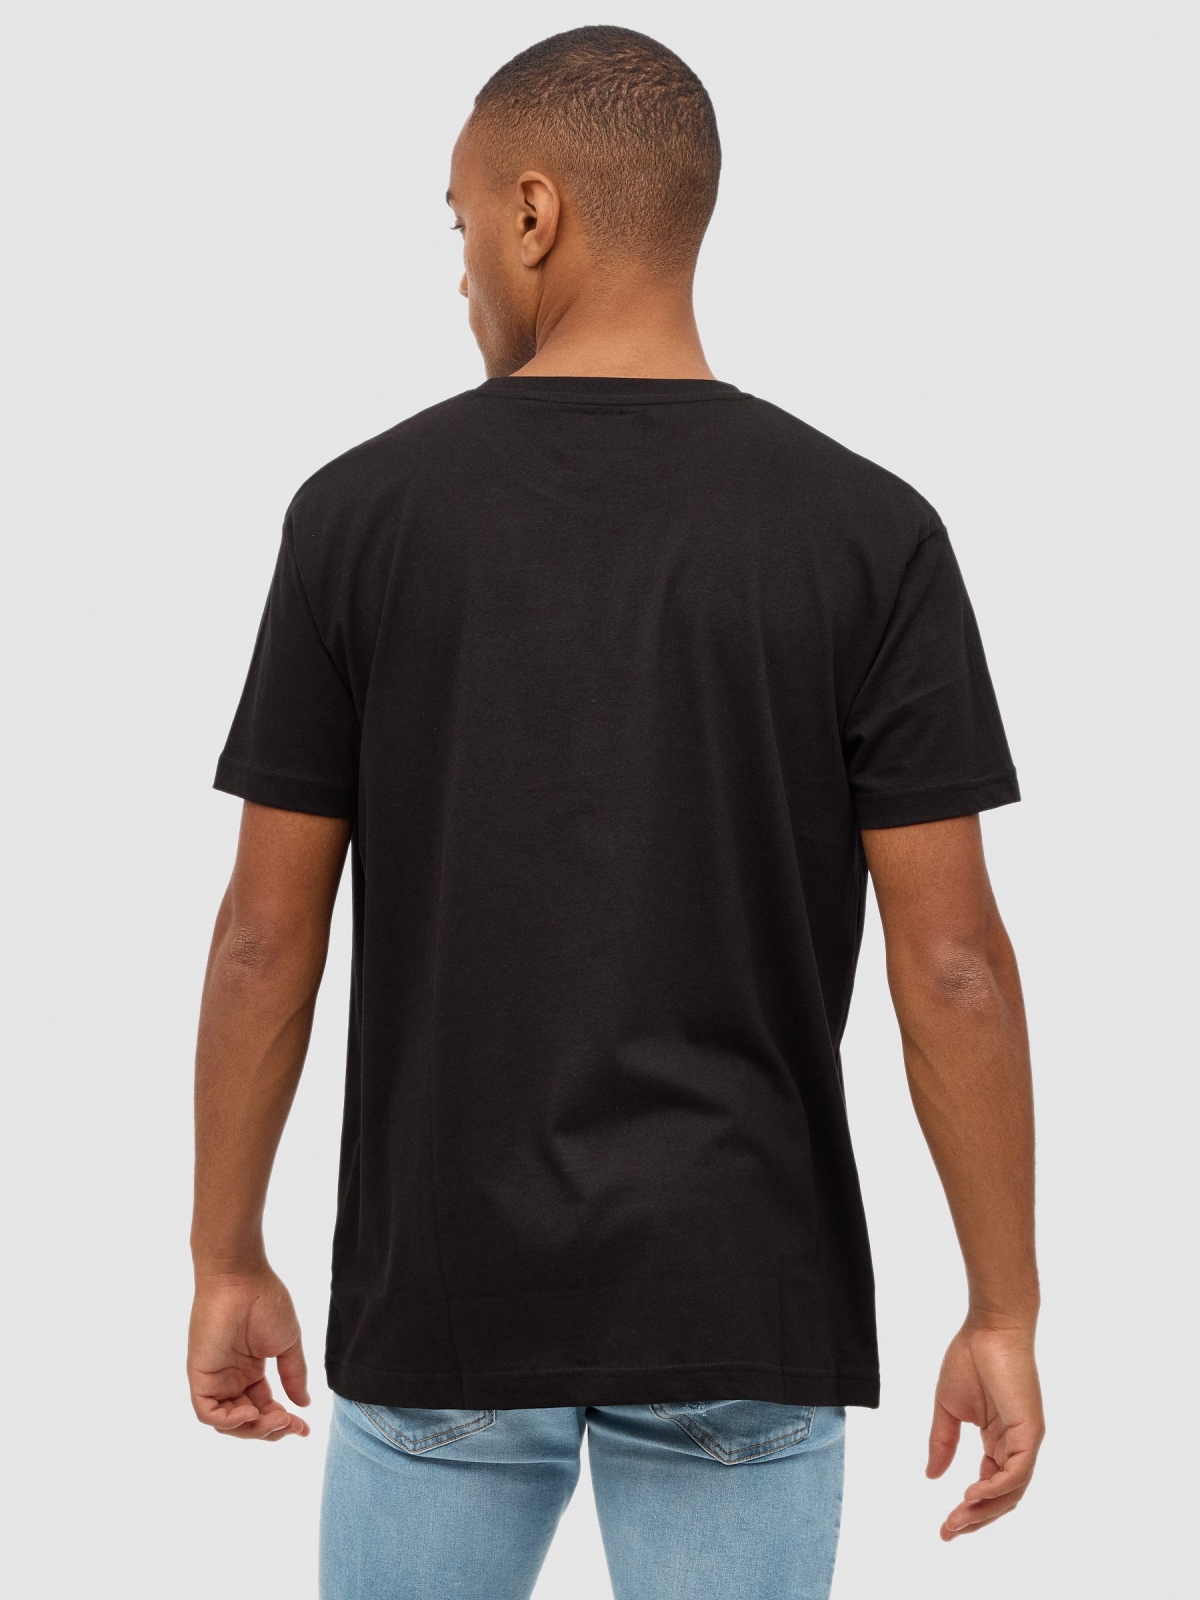 Camiseta urban calavera negro vista media trasera